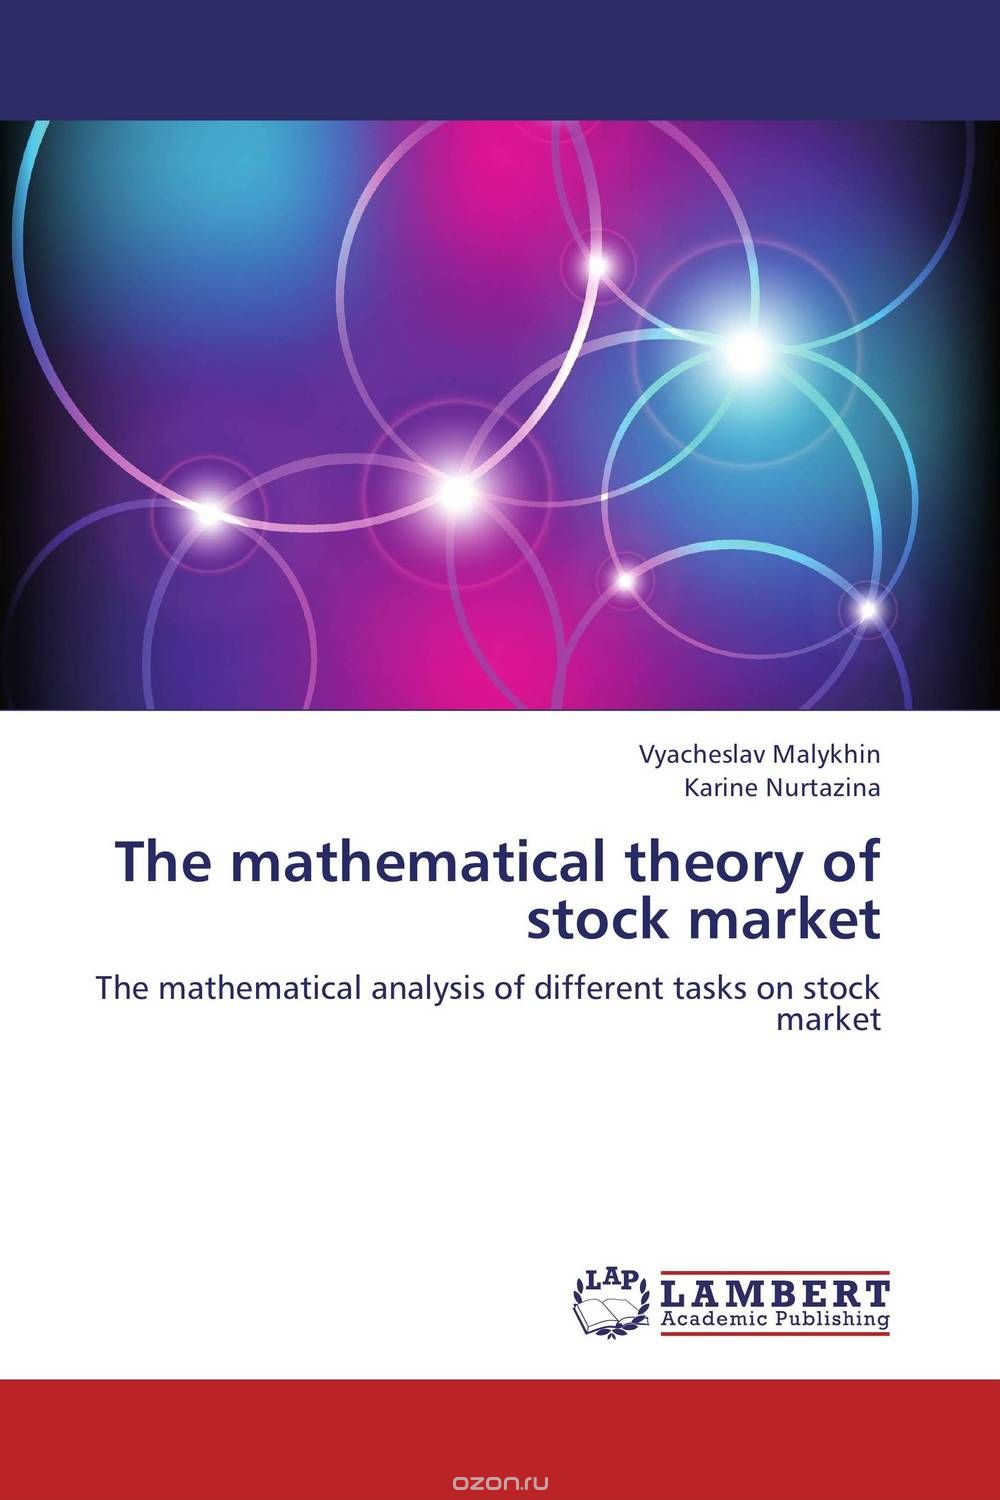 Скачать книгу "The mathematical theory of stock market"